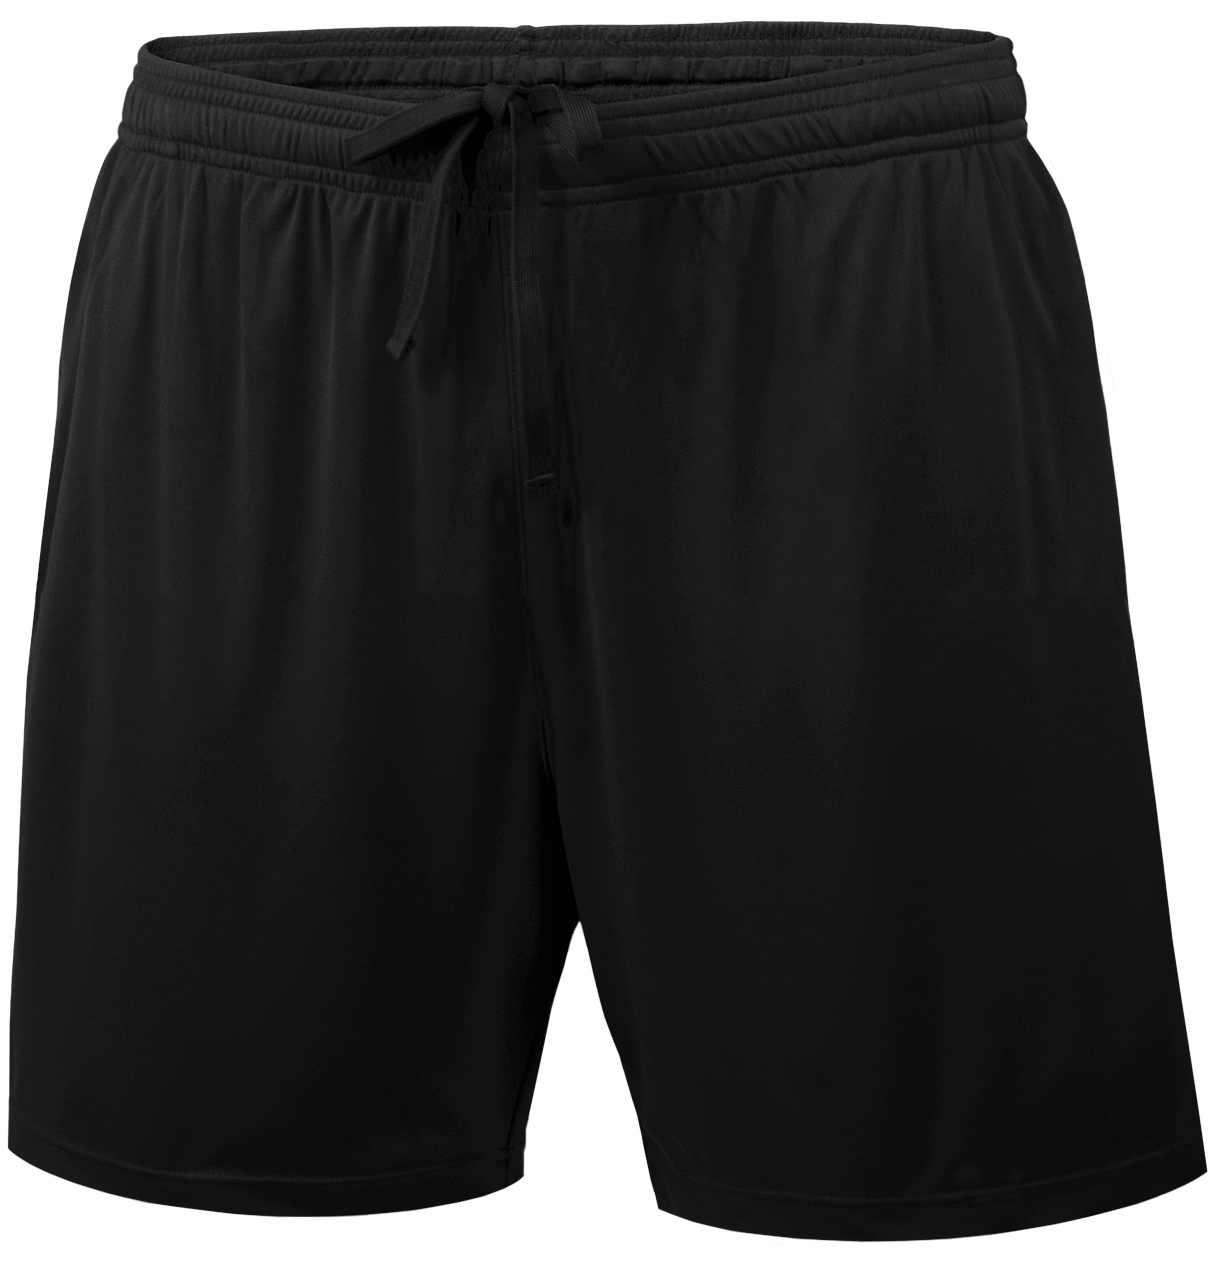 BAW Athletic Wear S703 - Ladies 5" XT Short